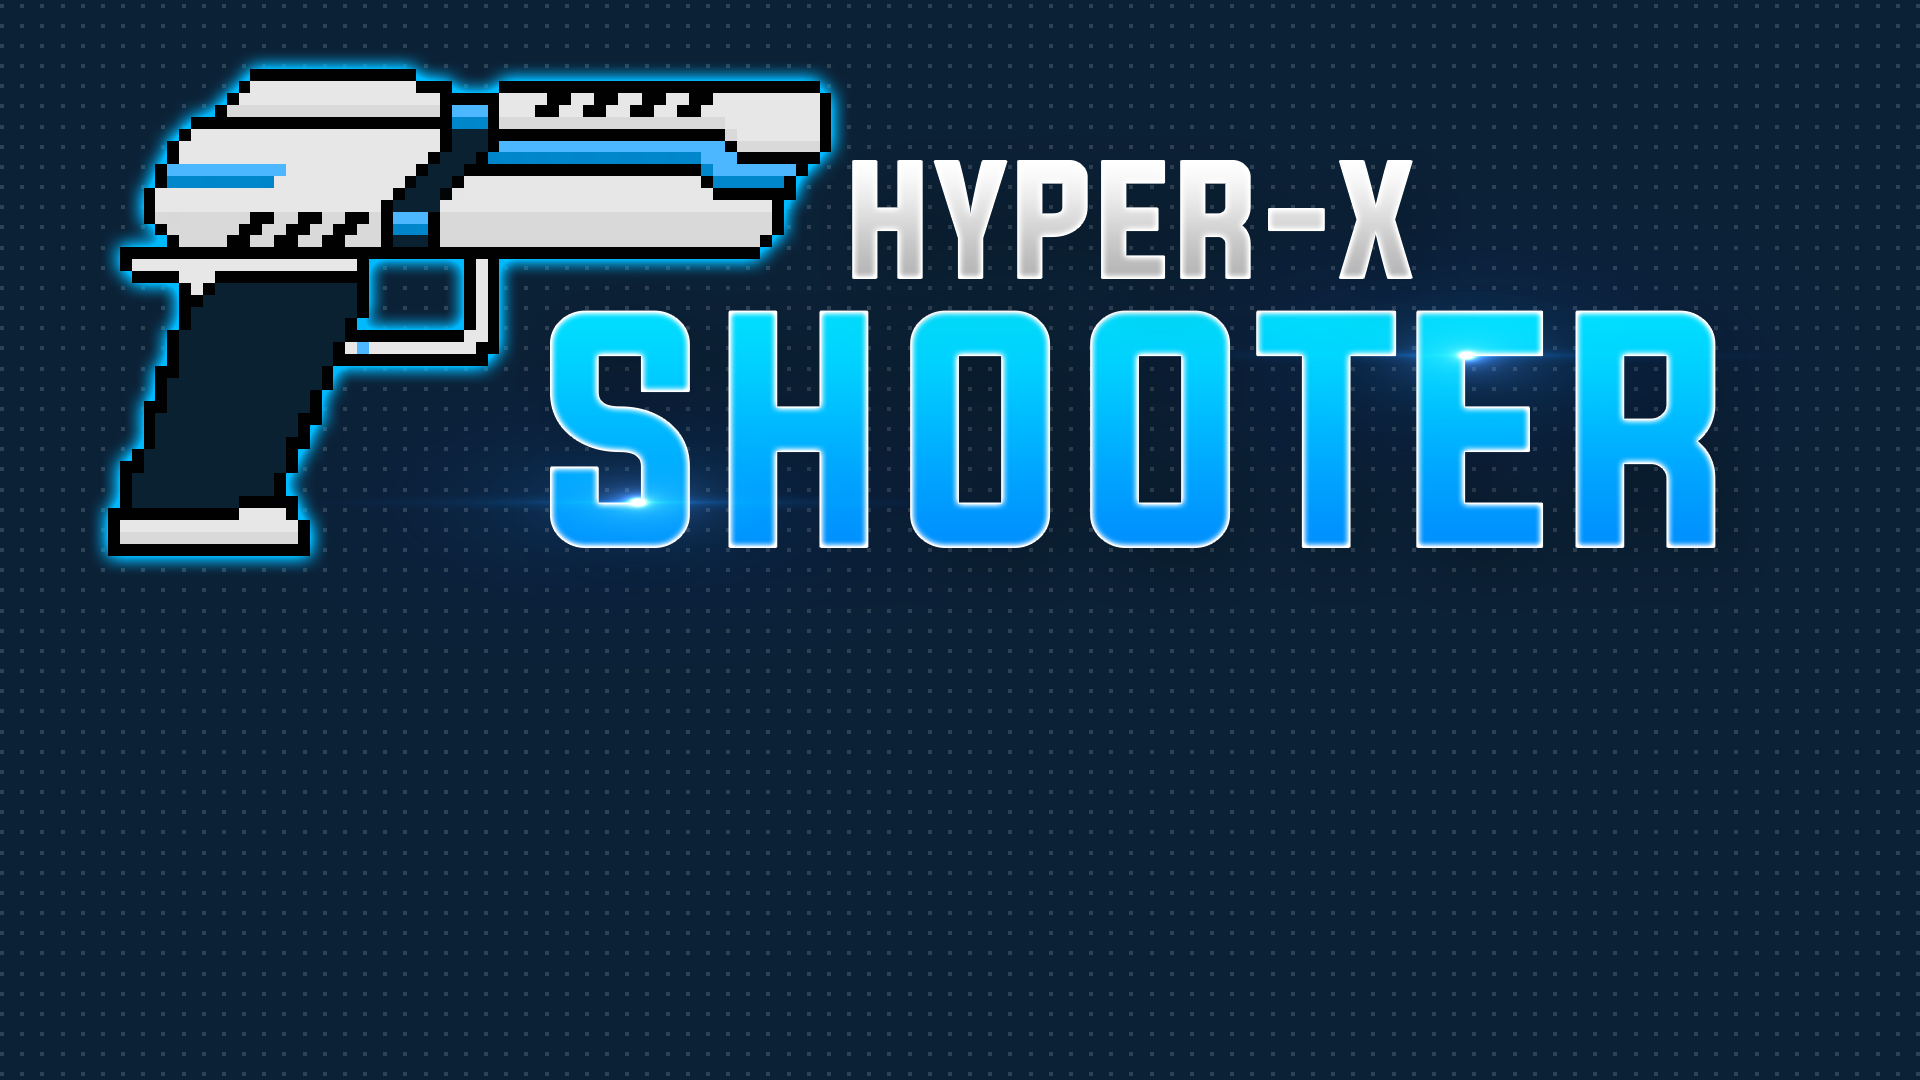 HyperxShooter